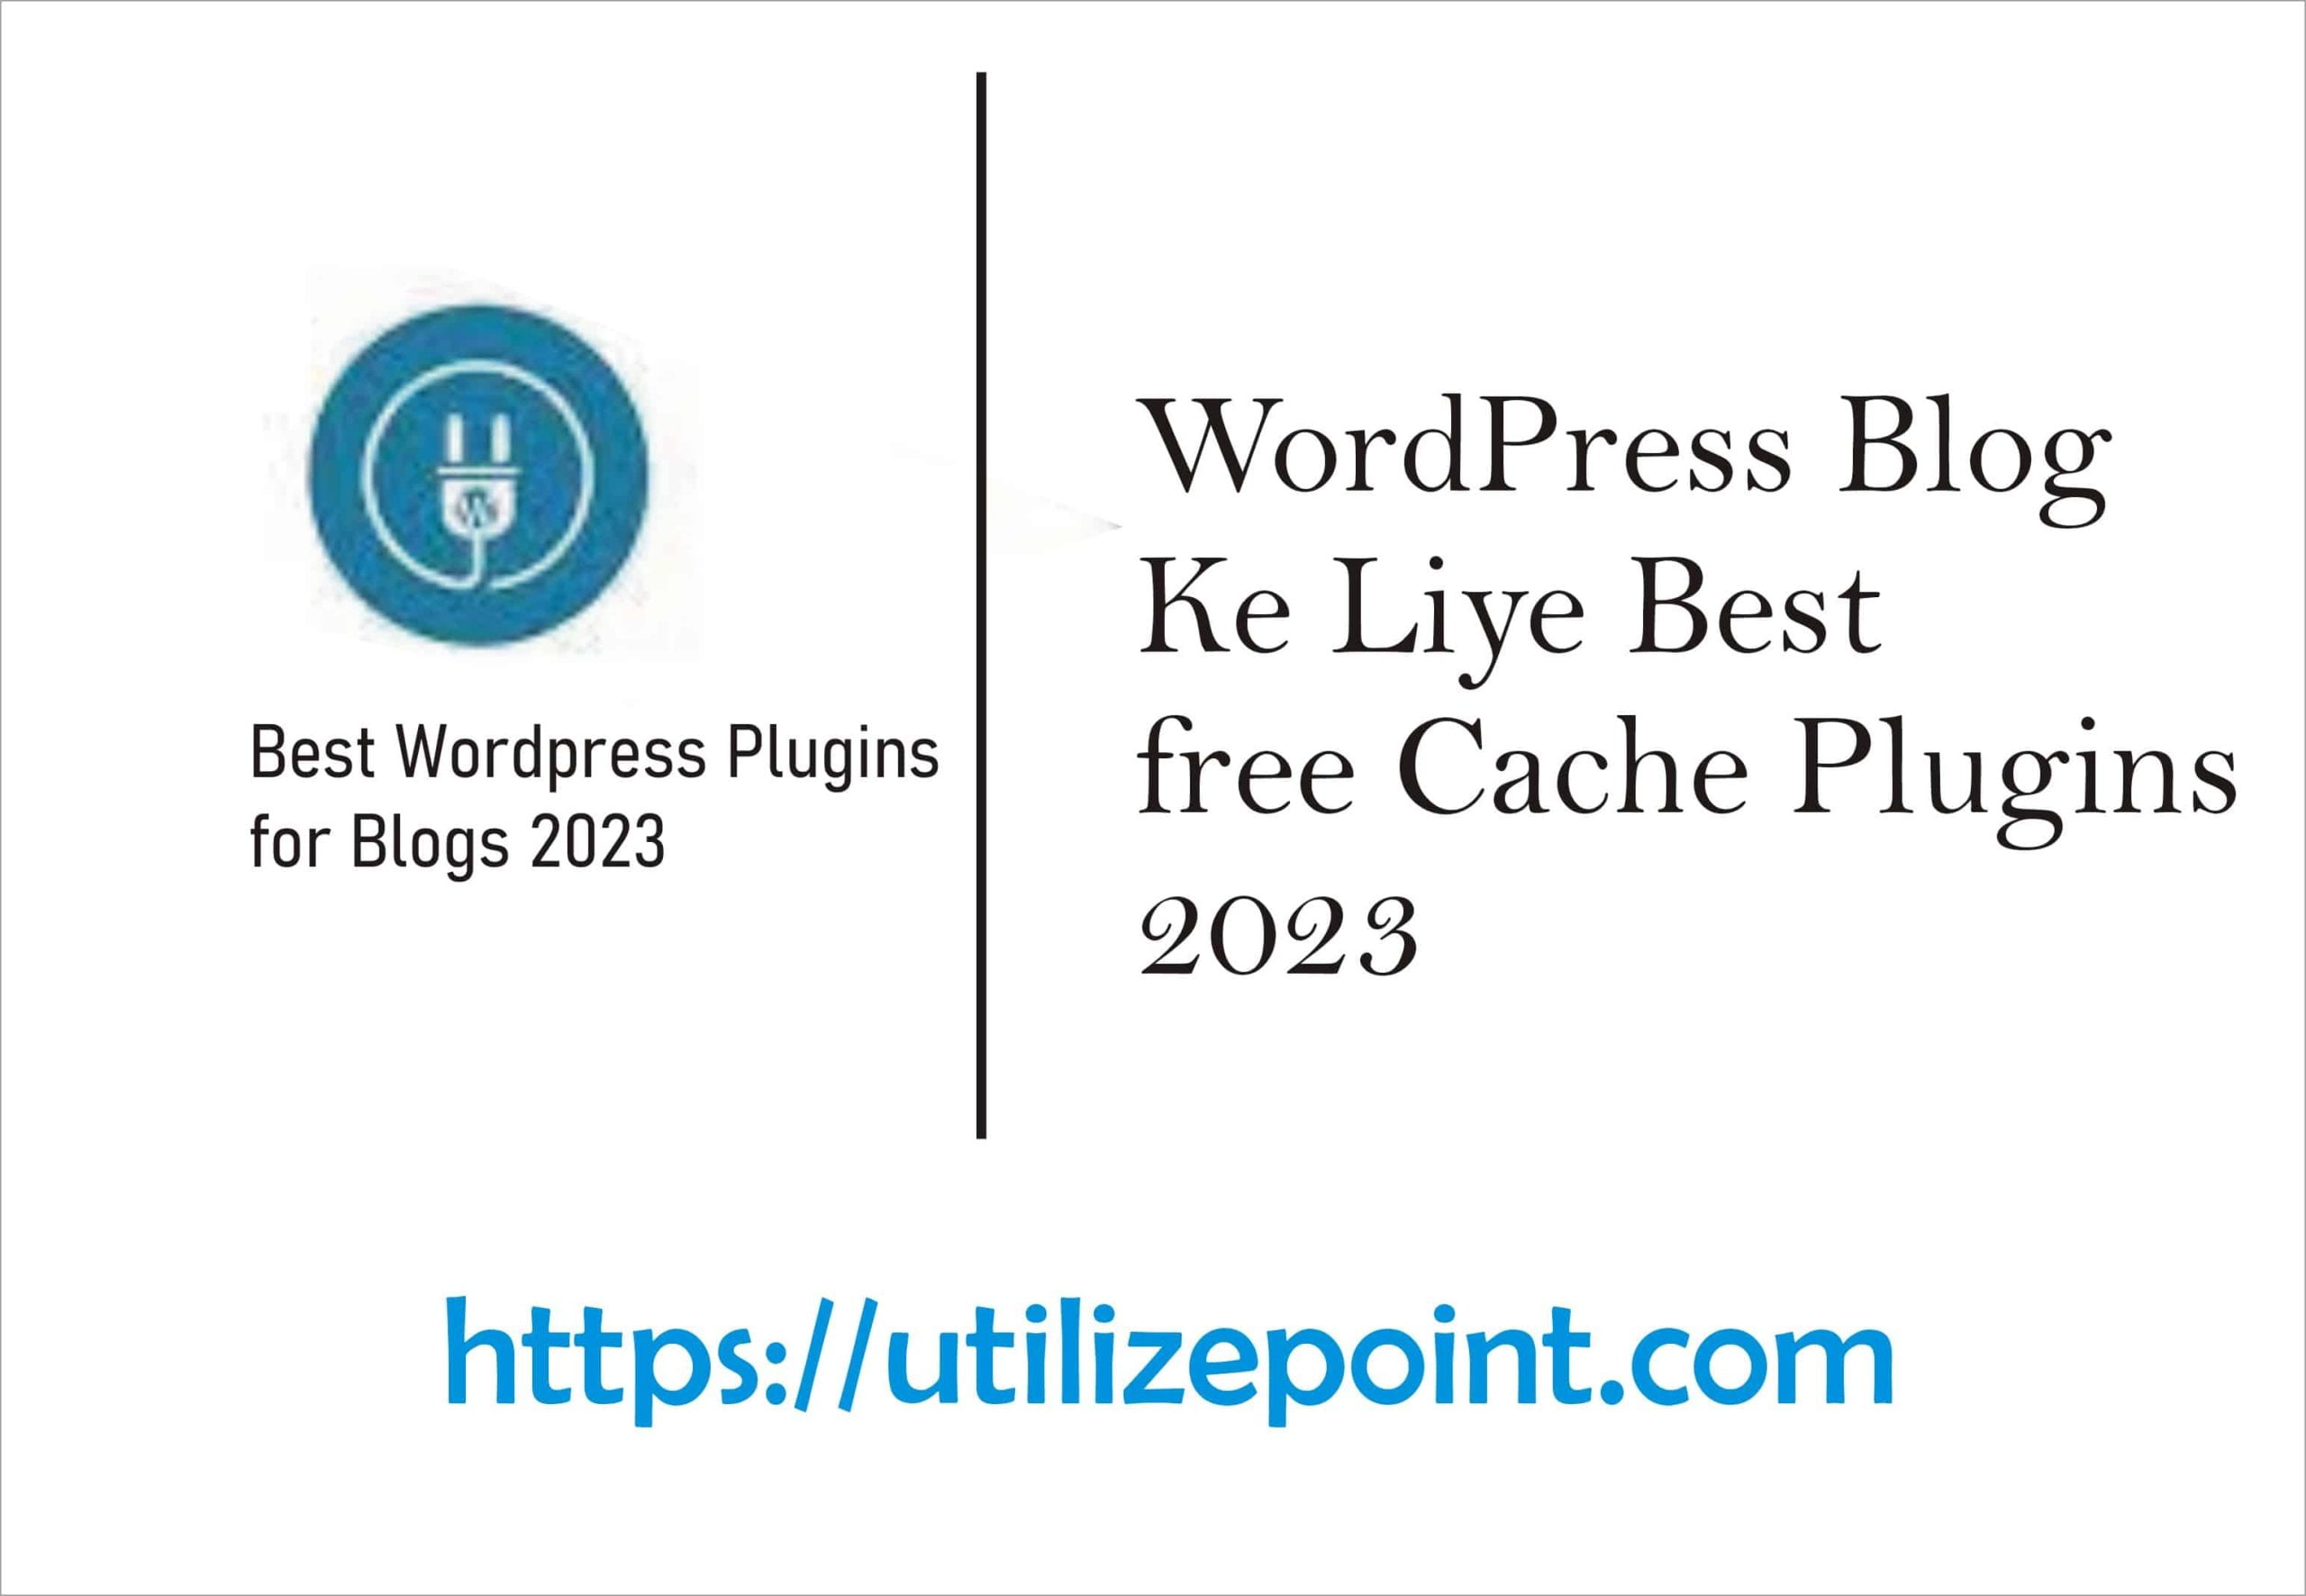 WordPress Blog Ke Liye Best free Cache Plugins 2023